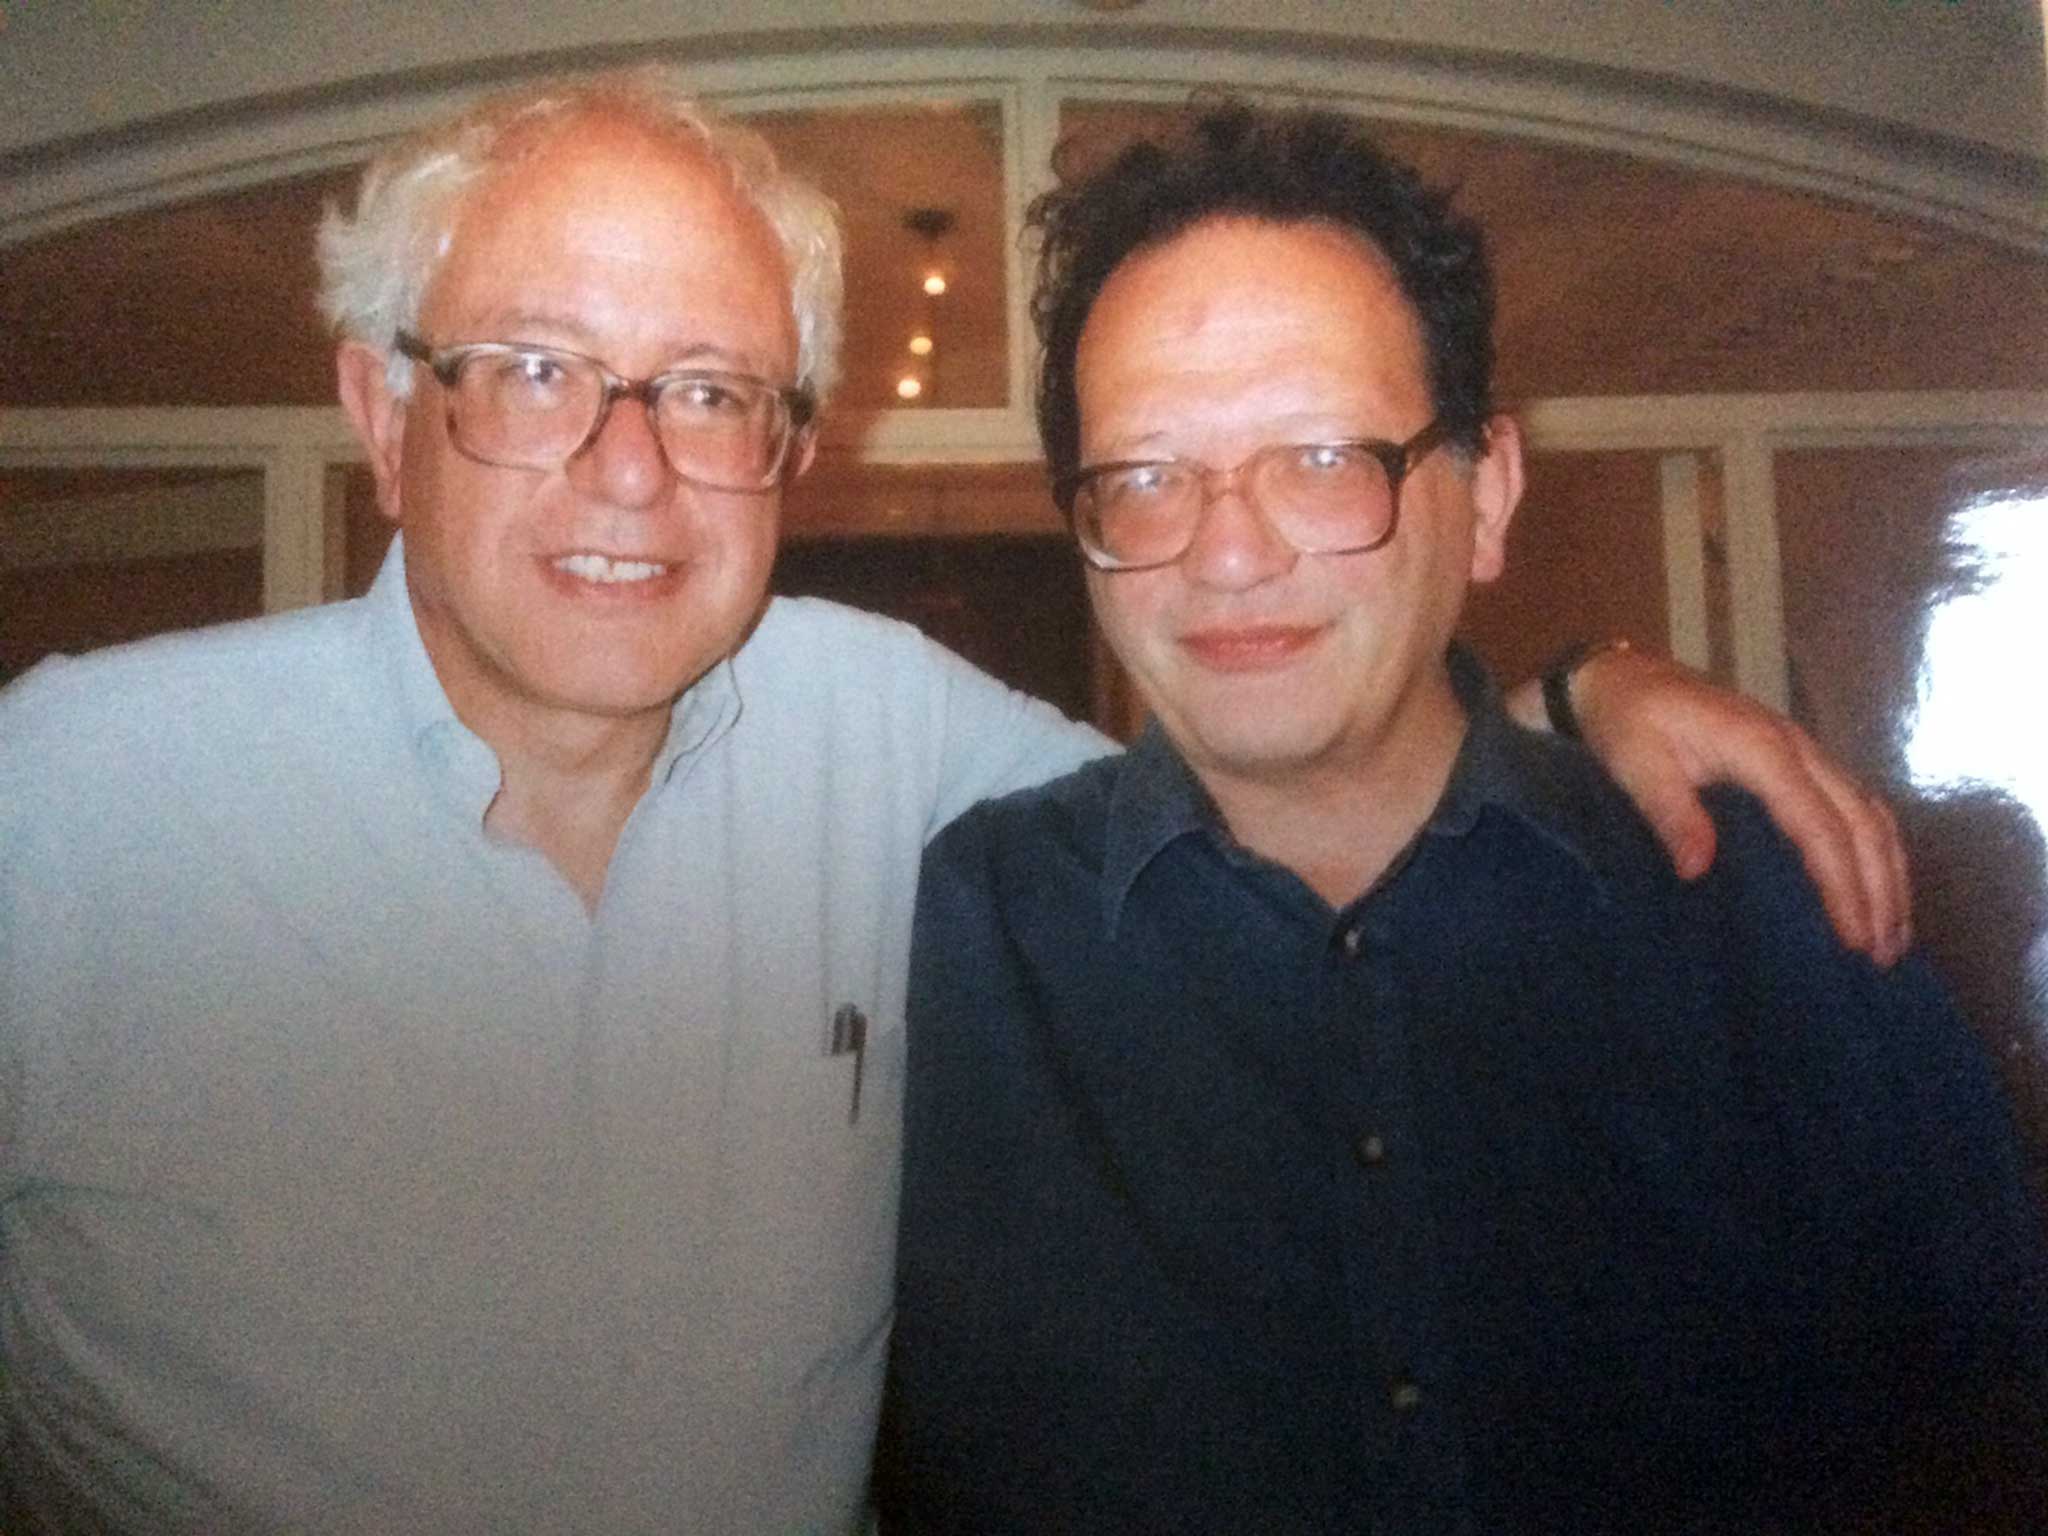 Bernie and Larry Sanders: brothers form quixotic cross-Atlantic